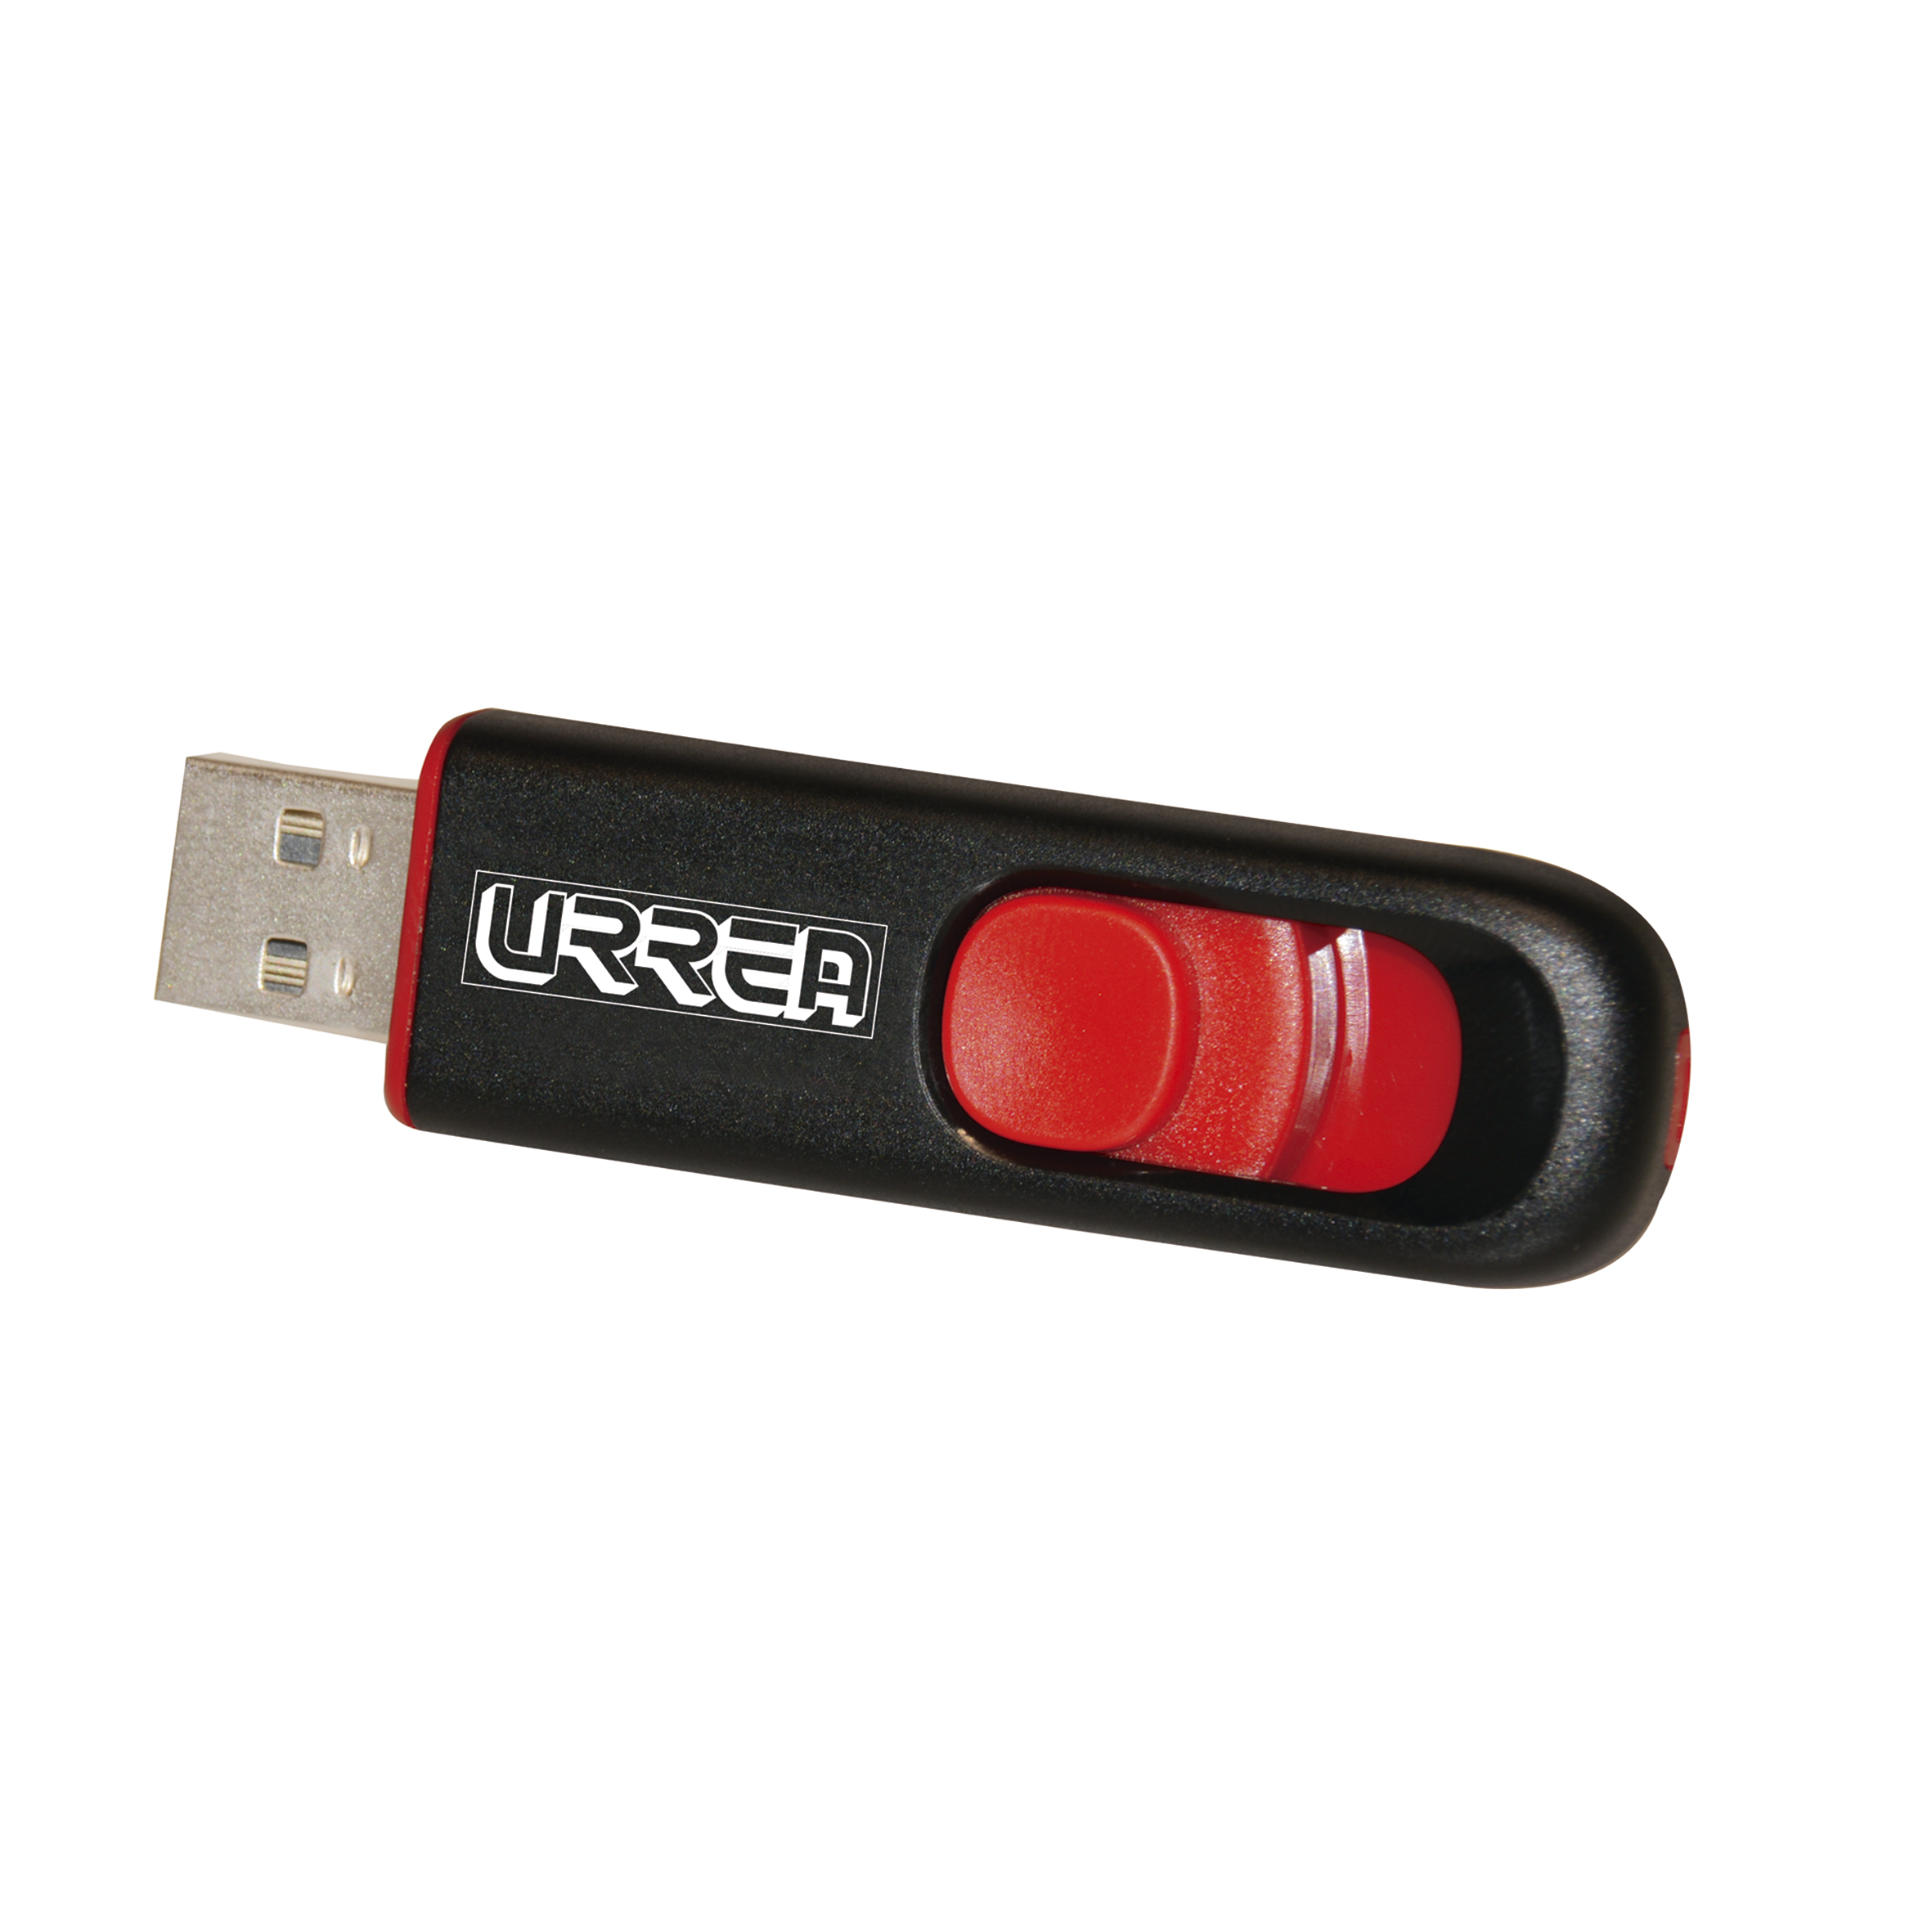 Imagen para Memoria USB retráctil 8GB de Grupo Urrea